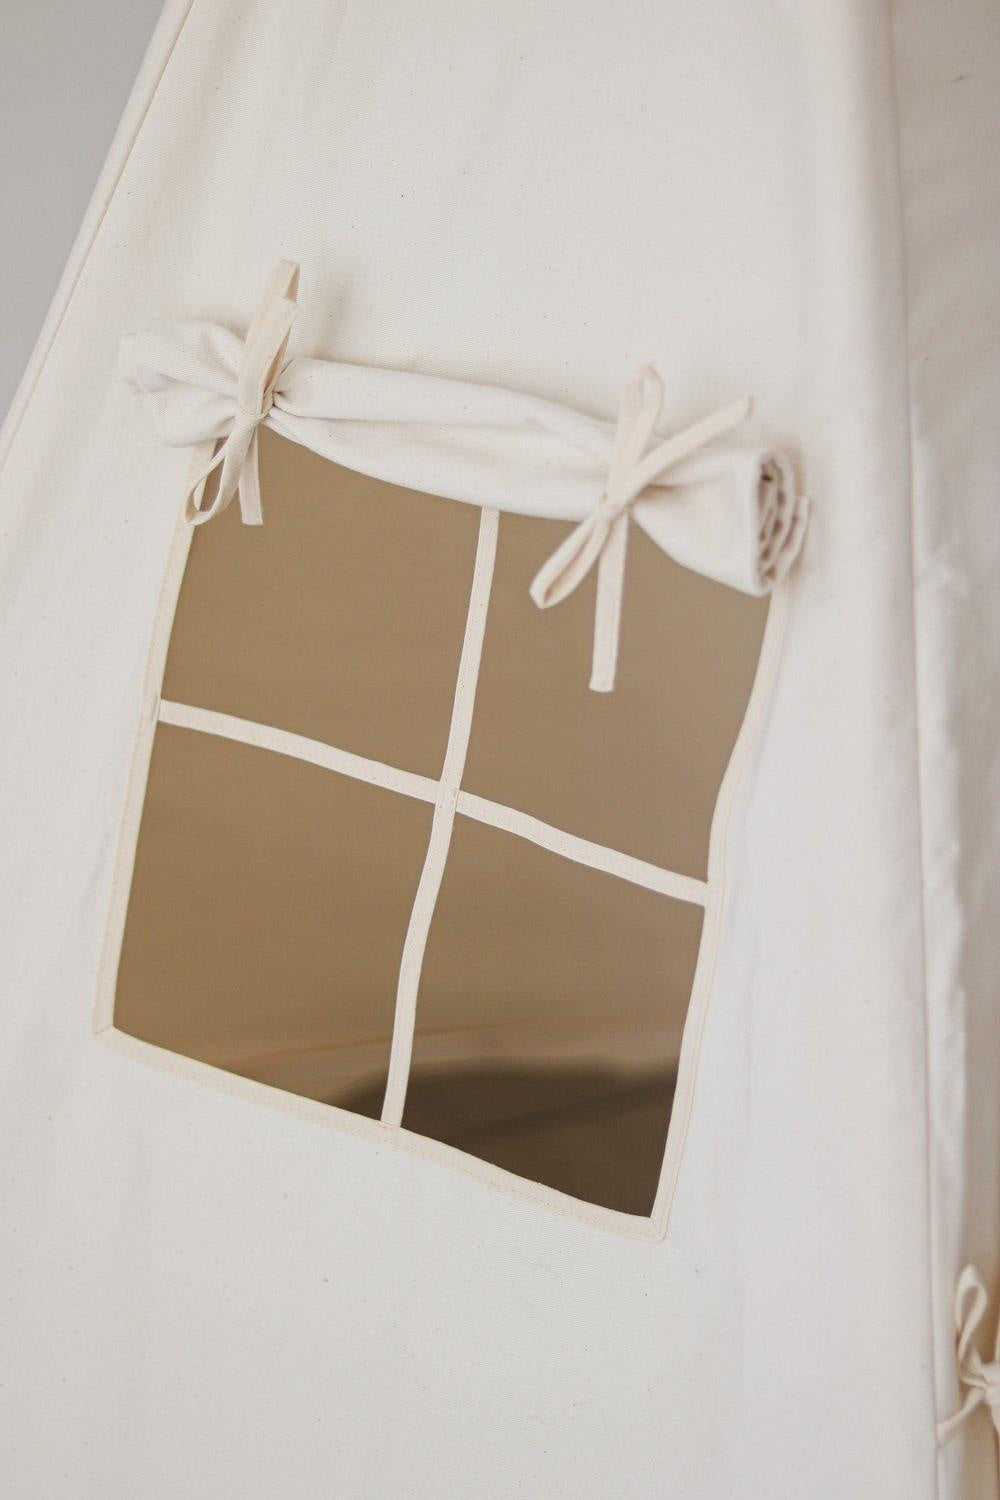 Teepee Tent “Beige” + "Grey Linen" Round Mat Set - Sumiye Co